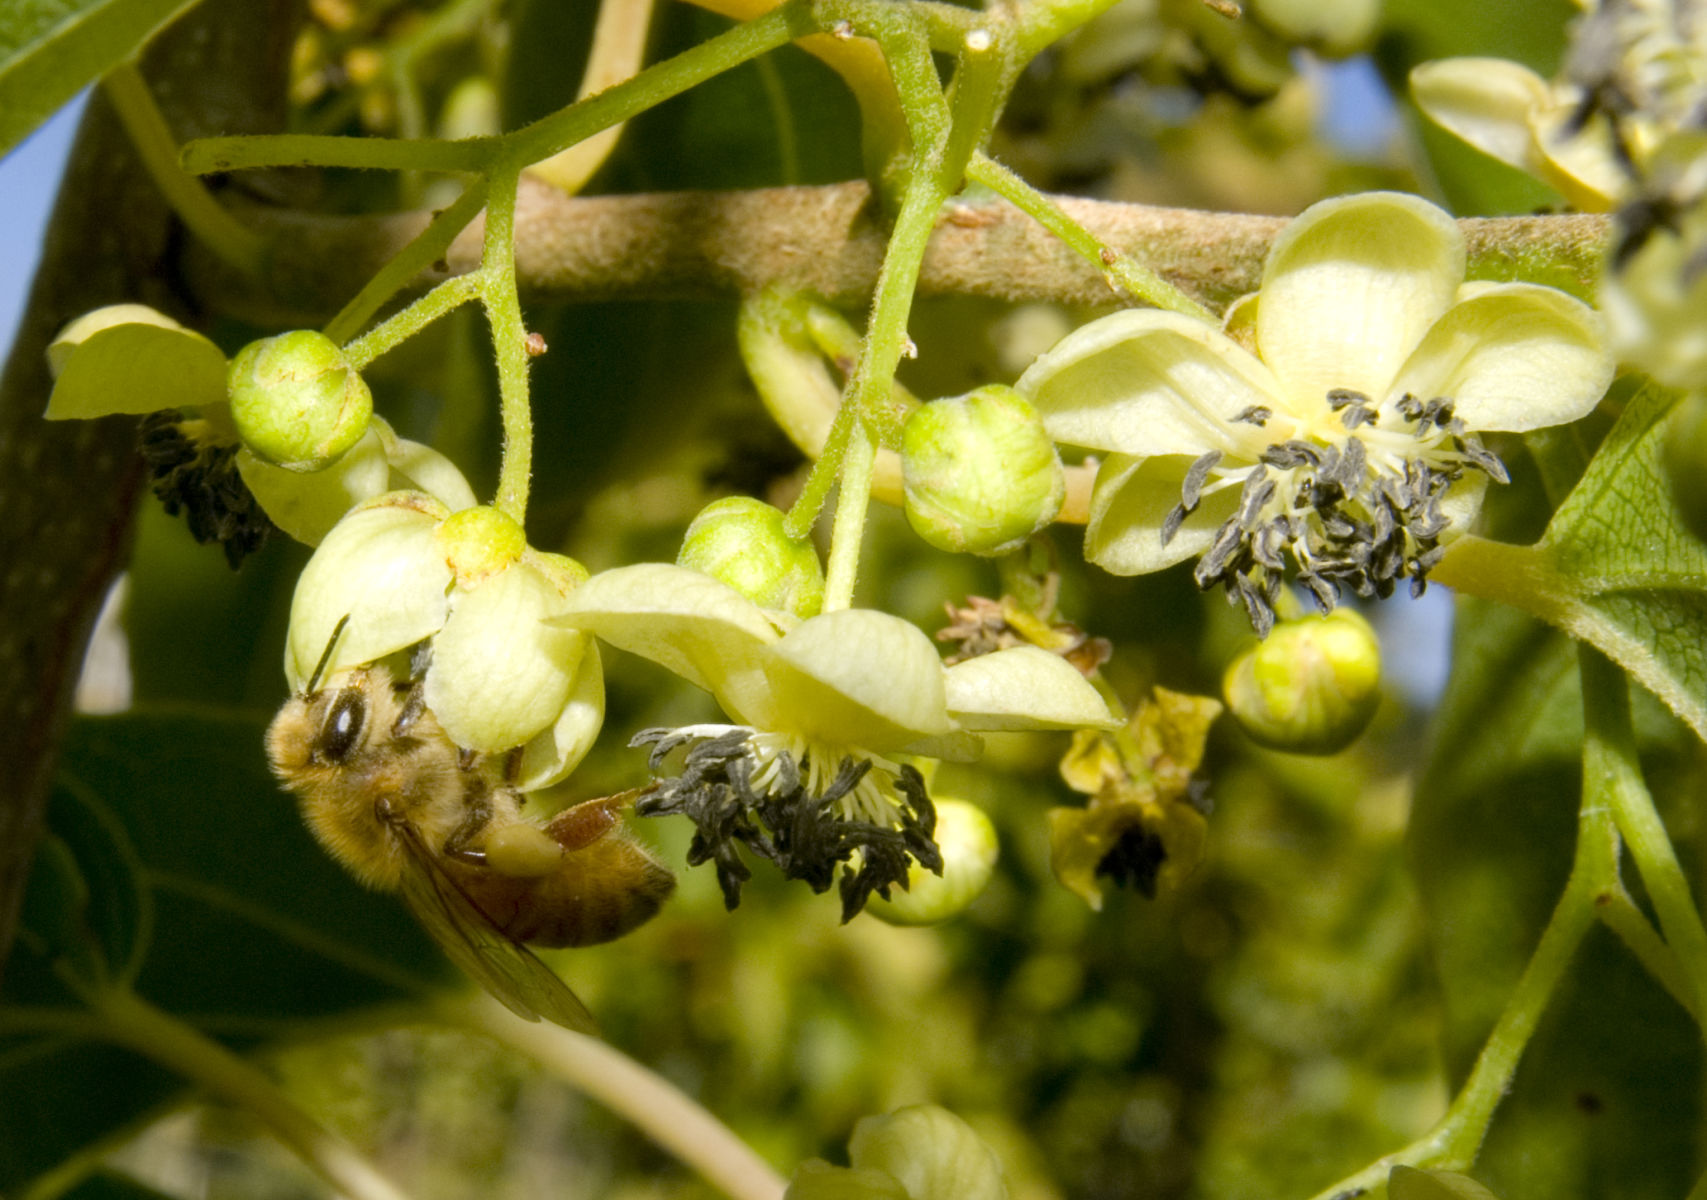 Next time you eat a kiwifruit, thank a bee